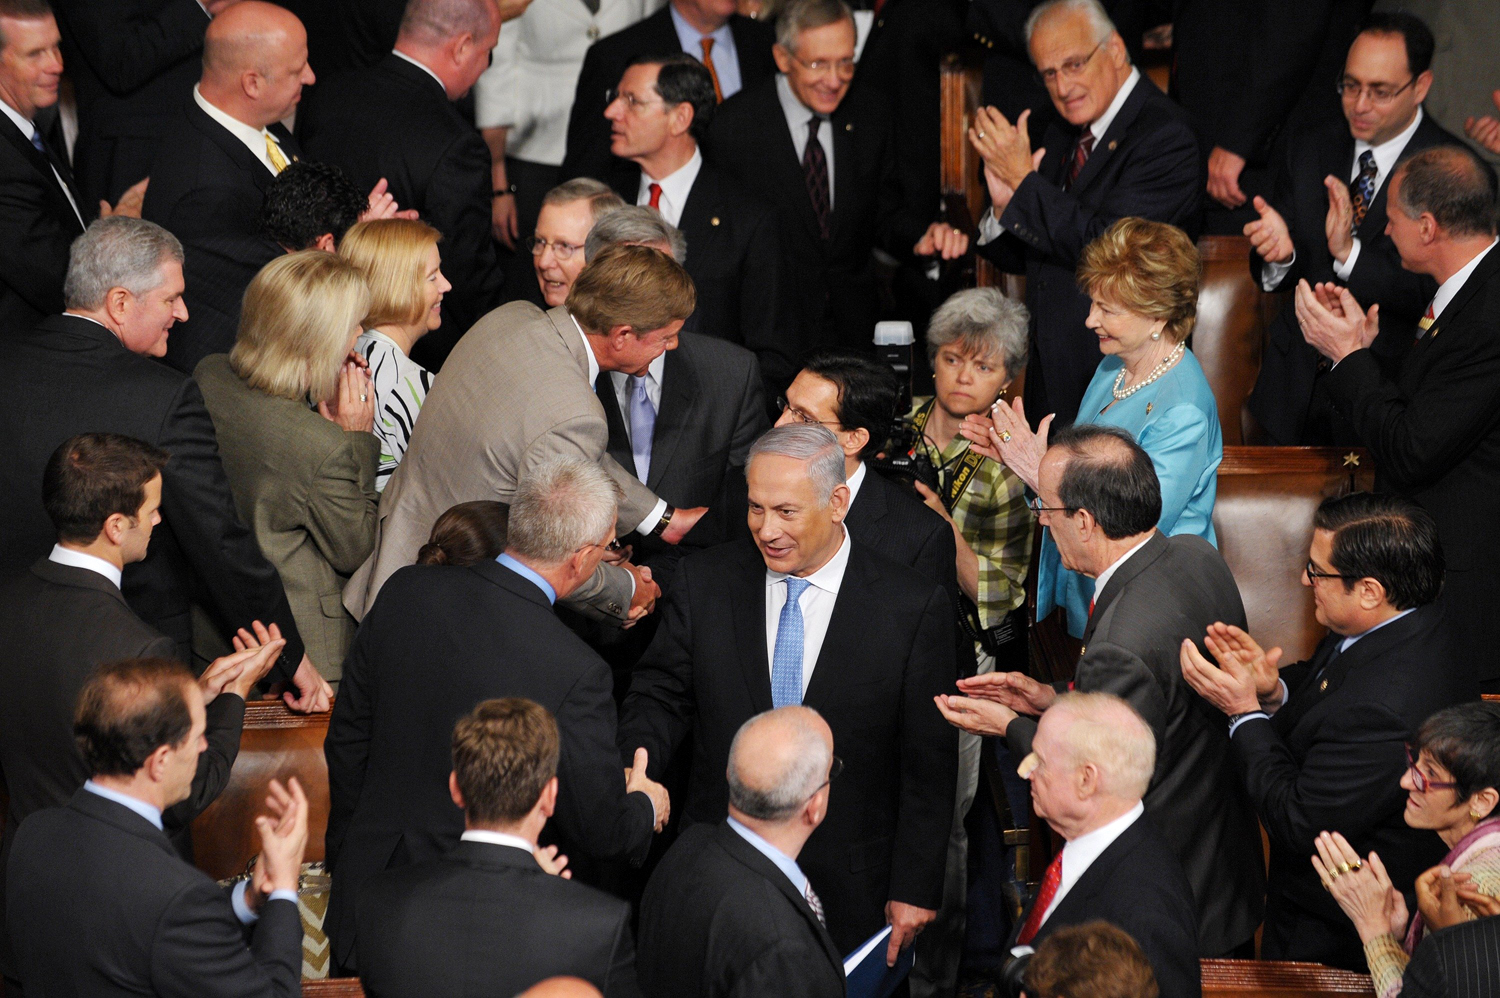 Israel's Prime Minister Benjamin Netanyahu (C) greets members of Congress following a Joint Meeting of Congress at the US Capitol, Washington, May 24, 2011.